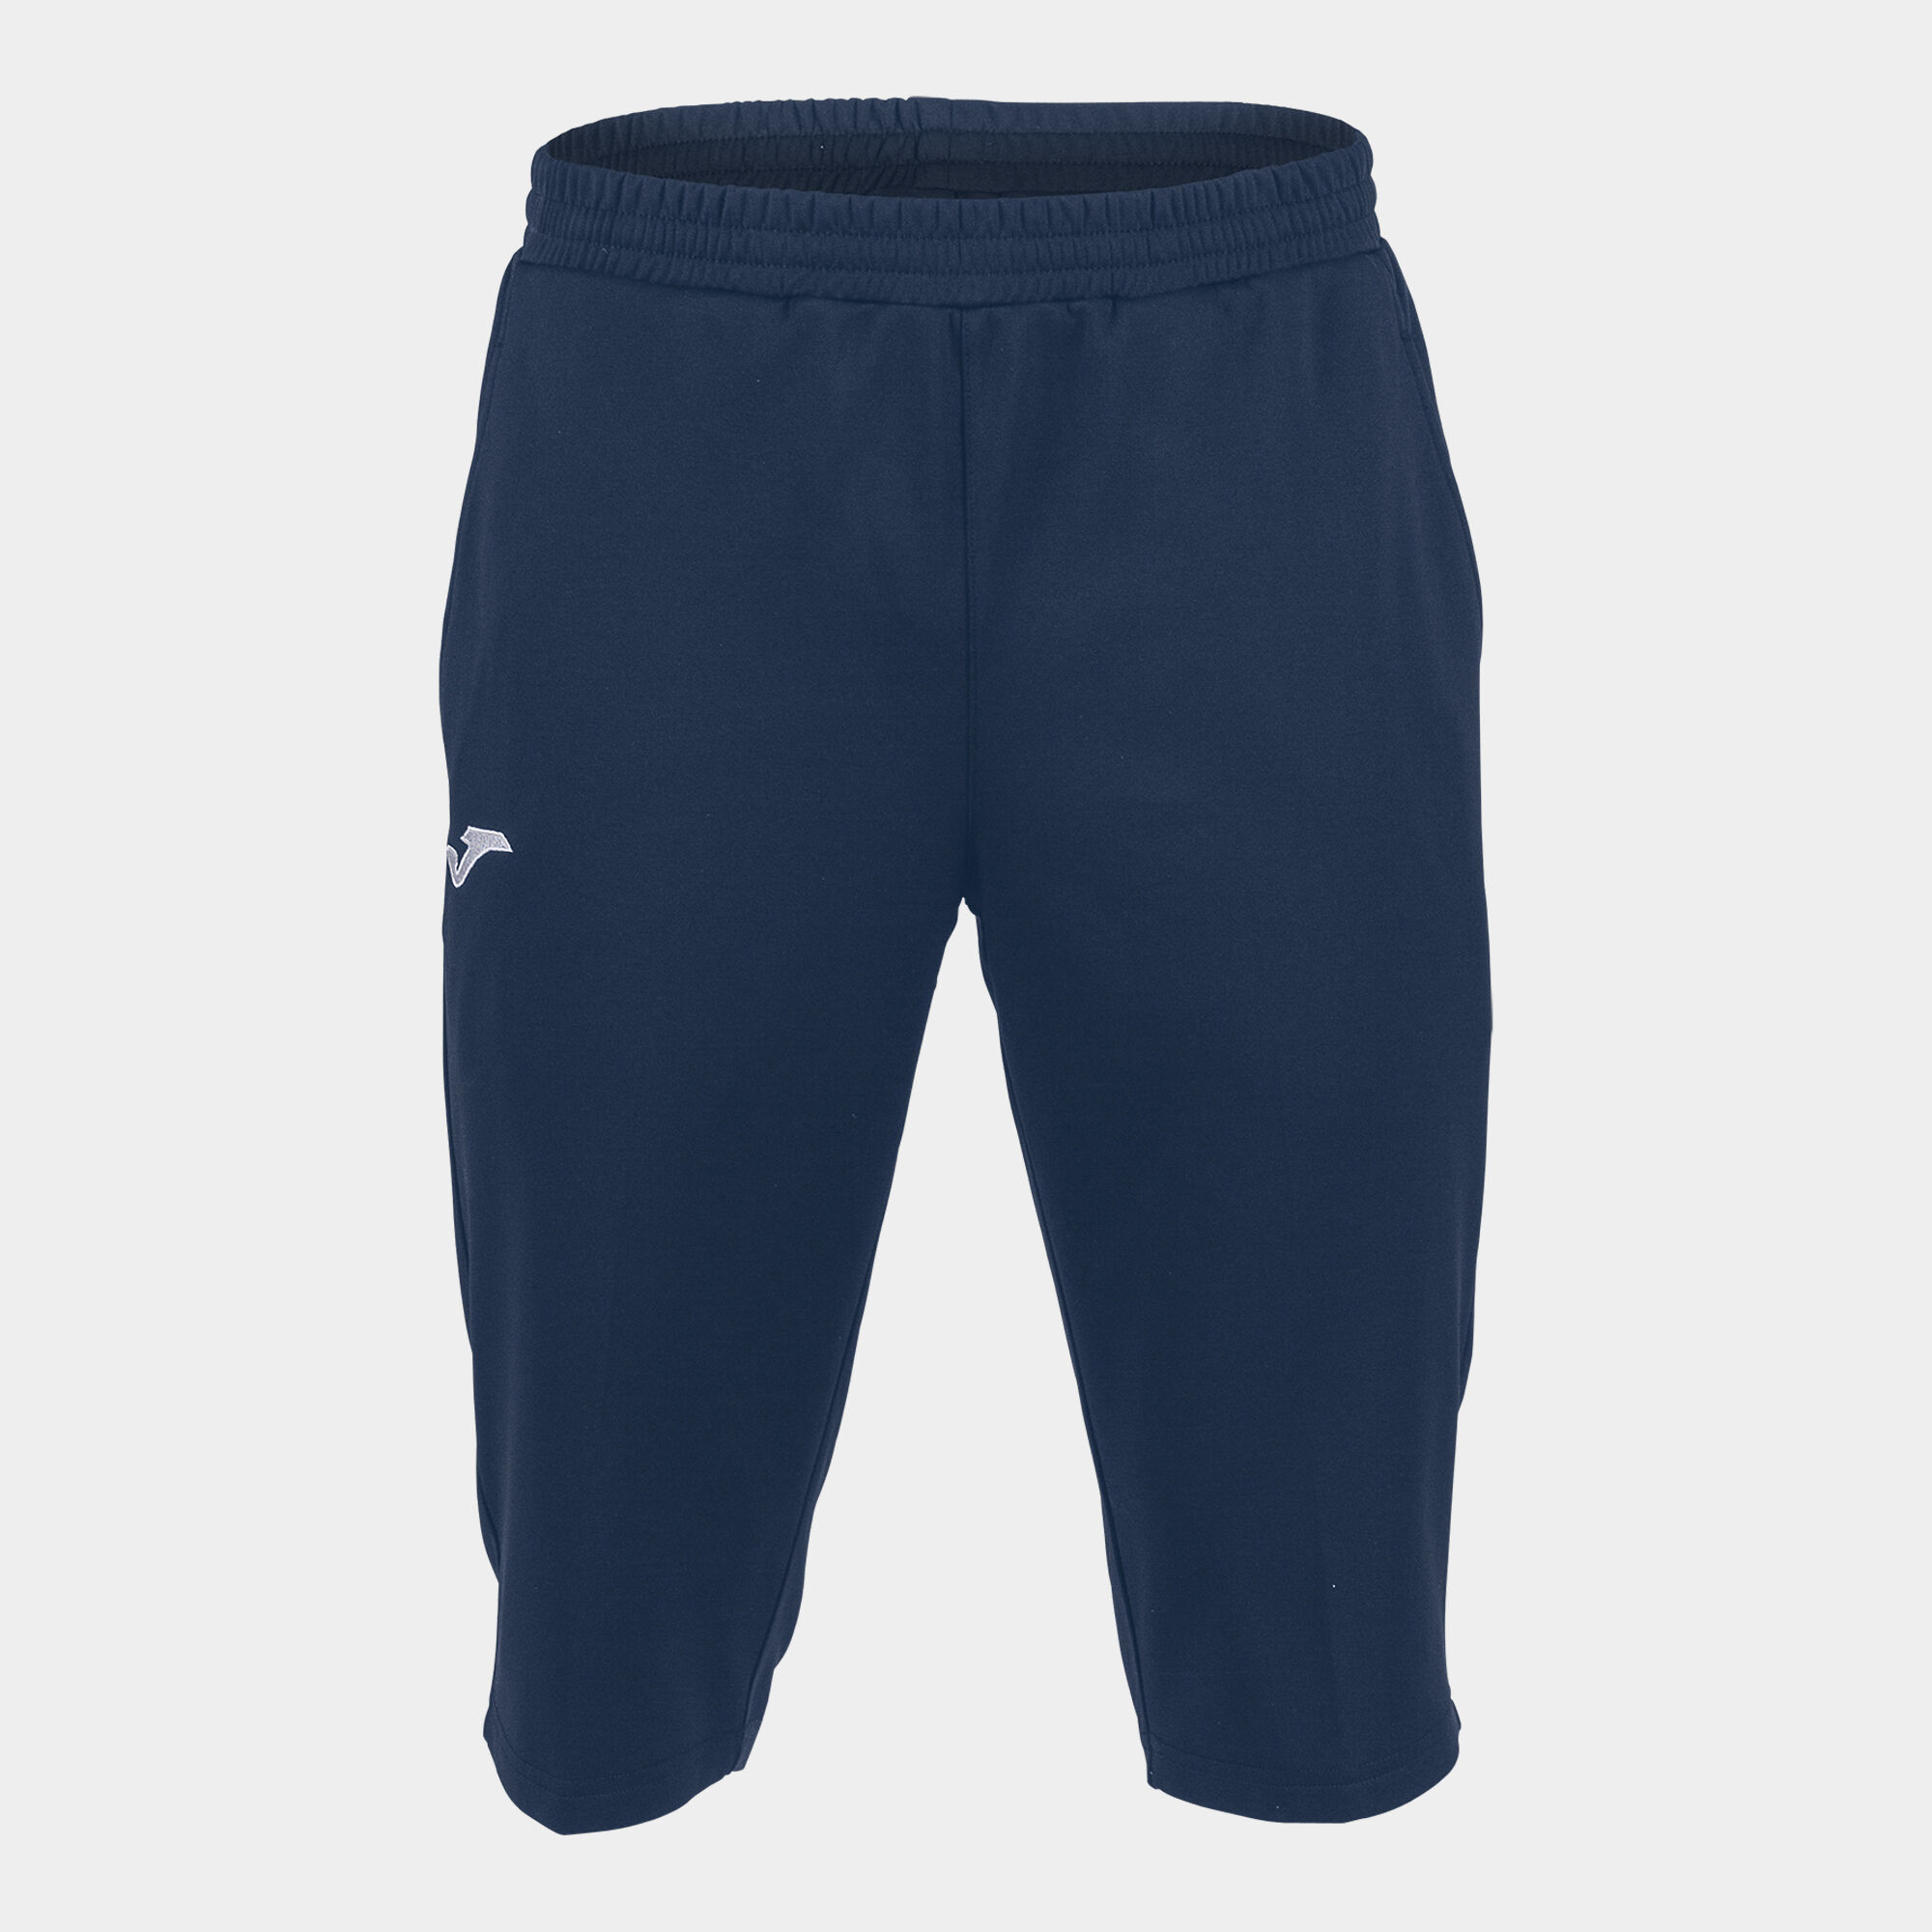 Bermuda shorts man Capri navy blue